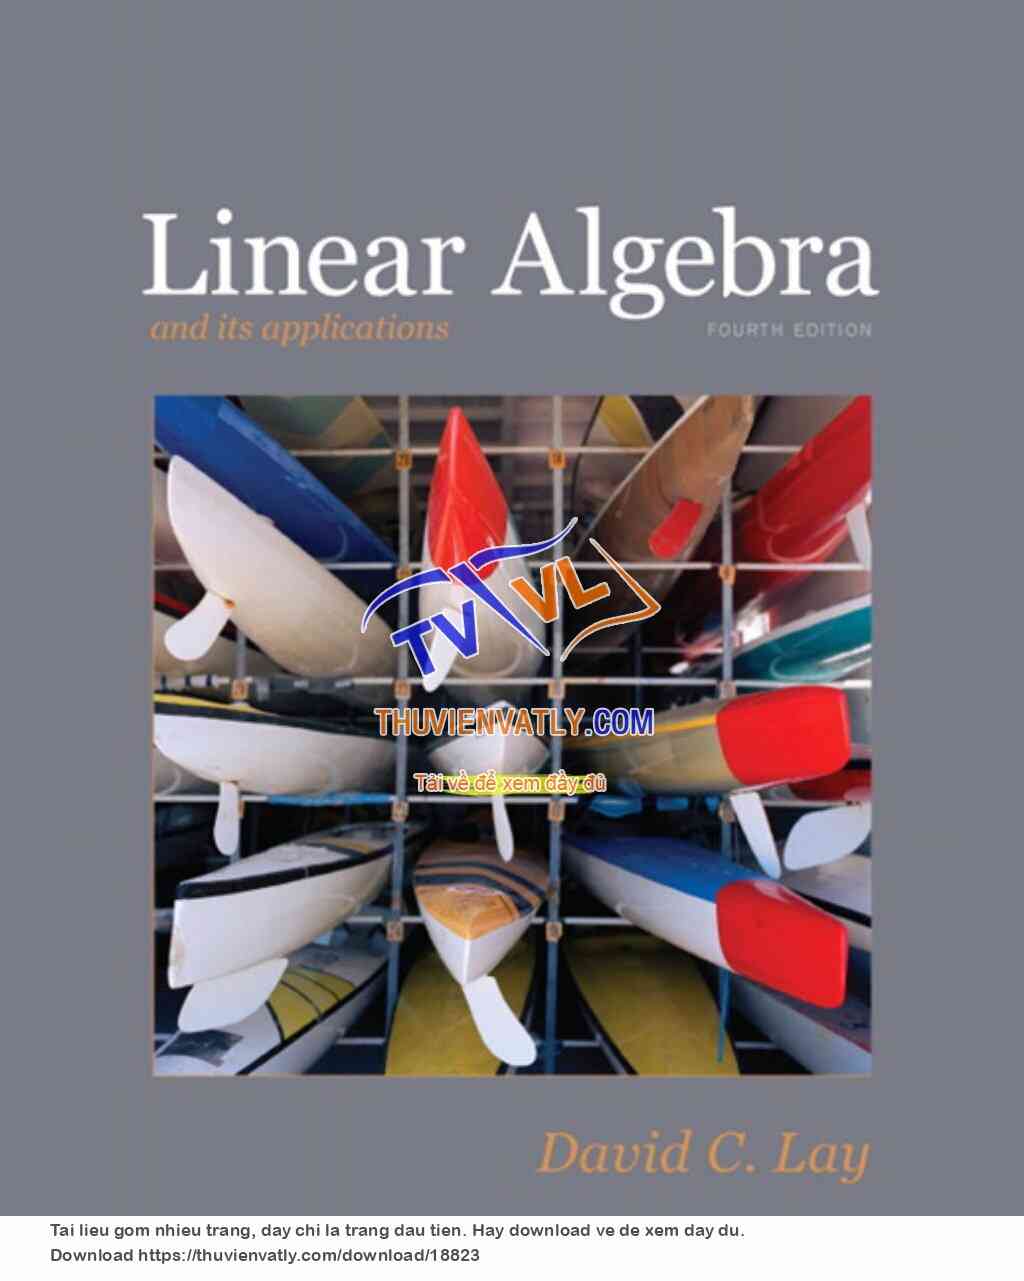 Linear Algebra and Its Applications (David C Lay, 4th ed, Pearson 2012)